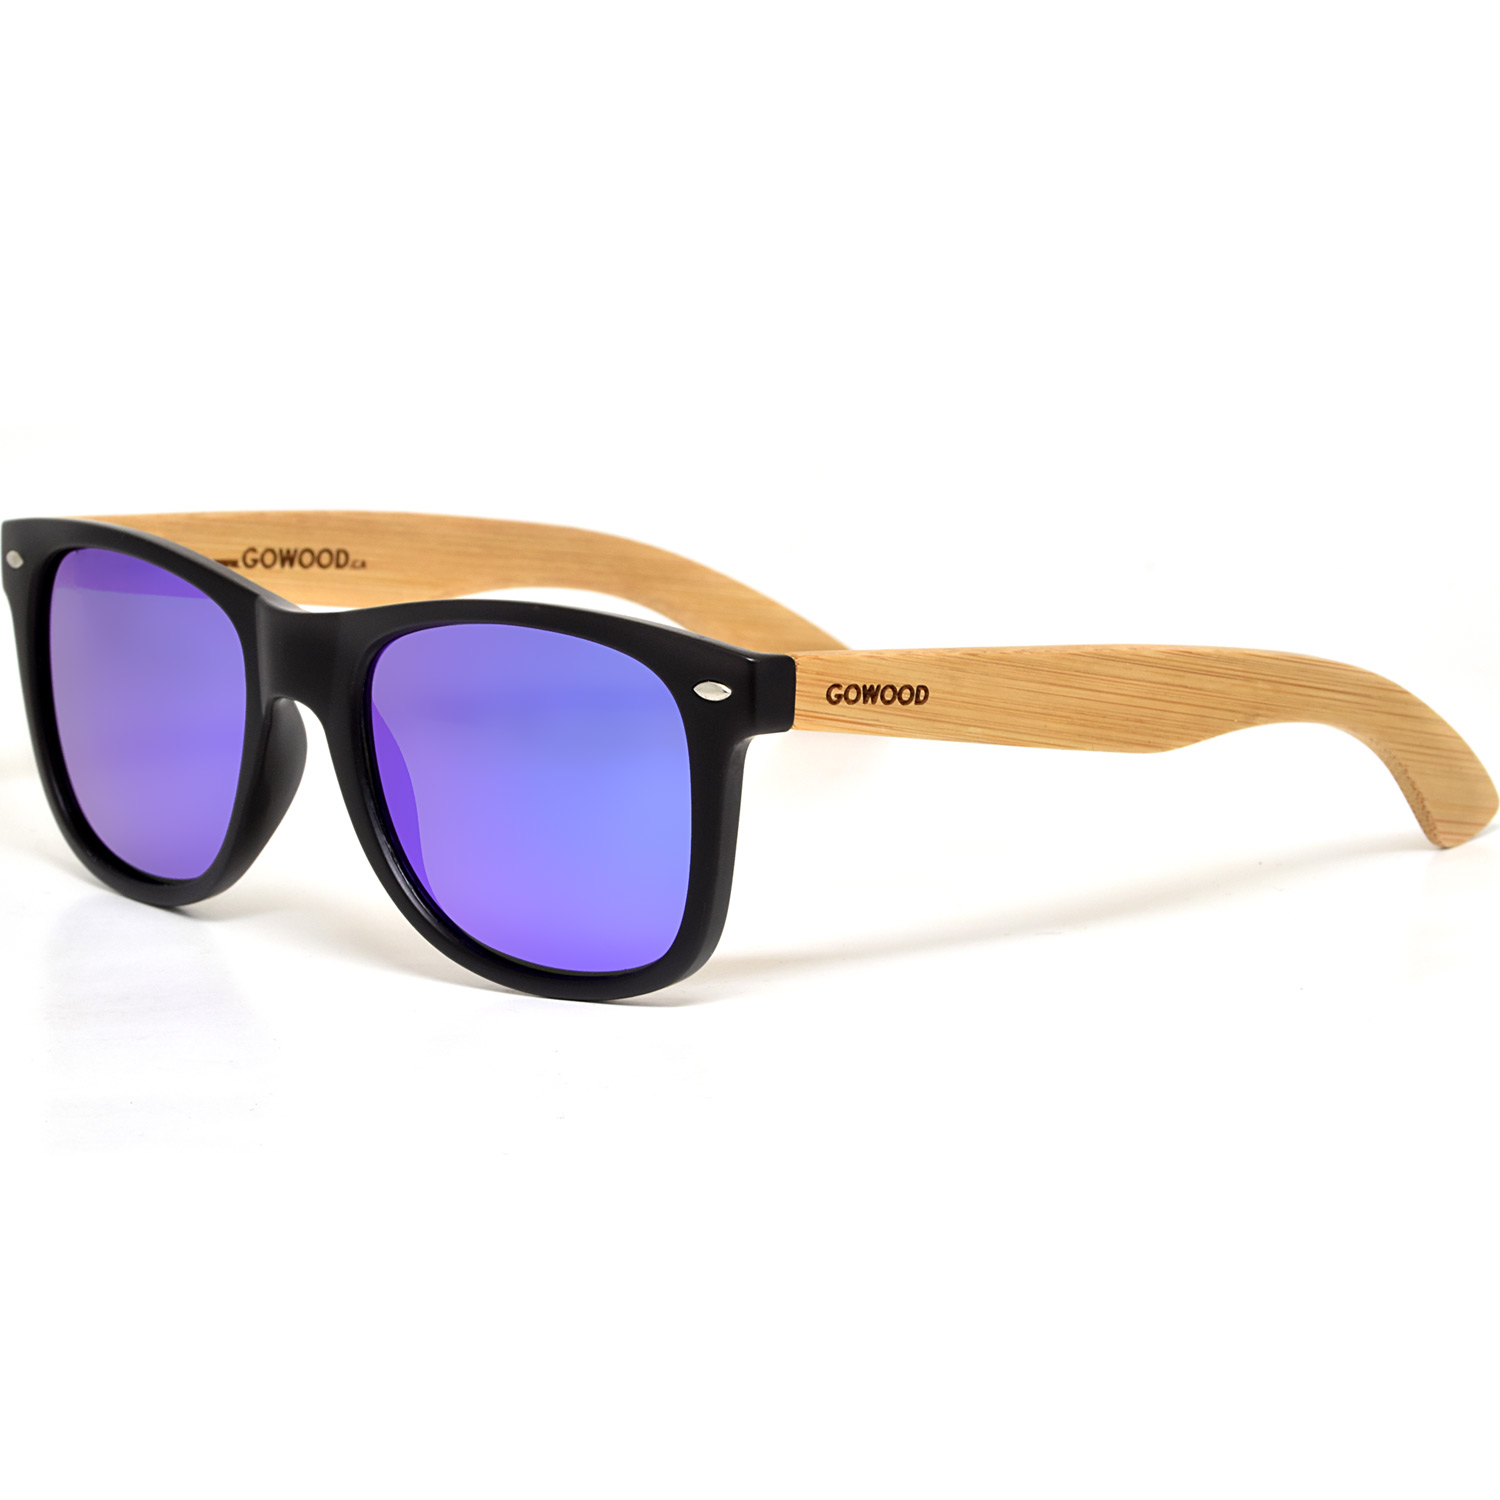 Bamboo wood wayfarer sunglasses blue lenses